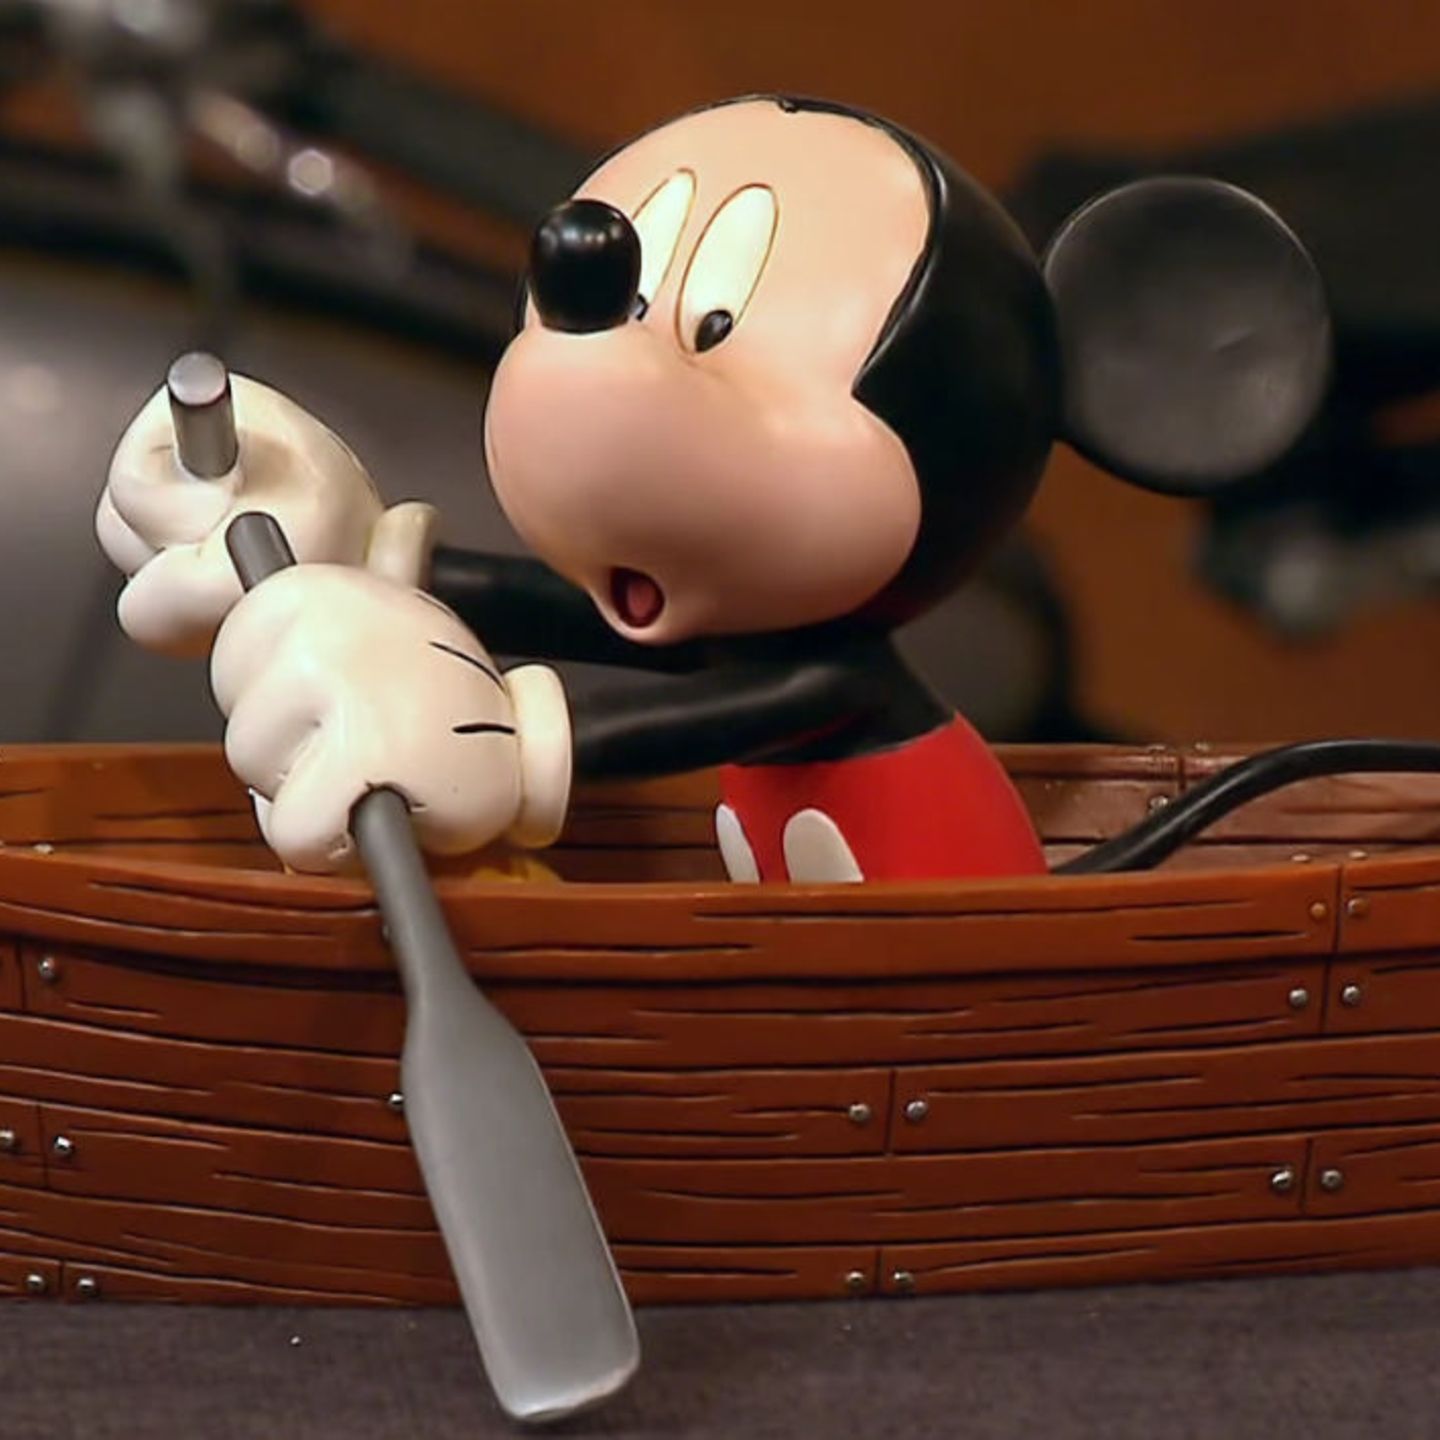 Bares für Rares: Micky Maus bringt Verkäufer viel Geld